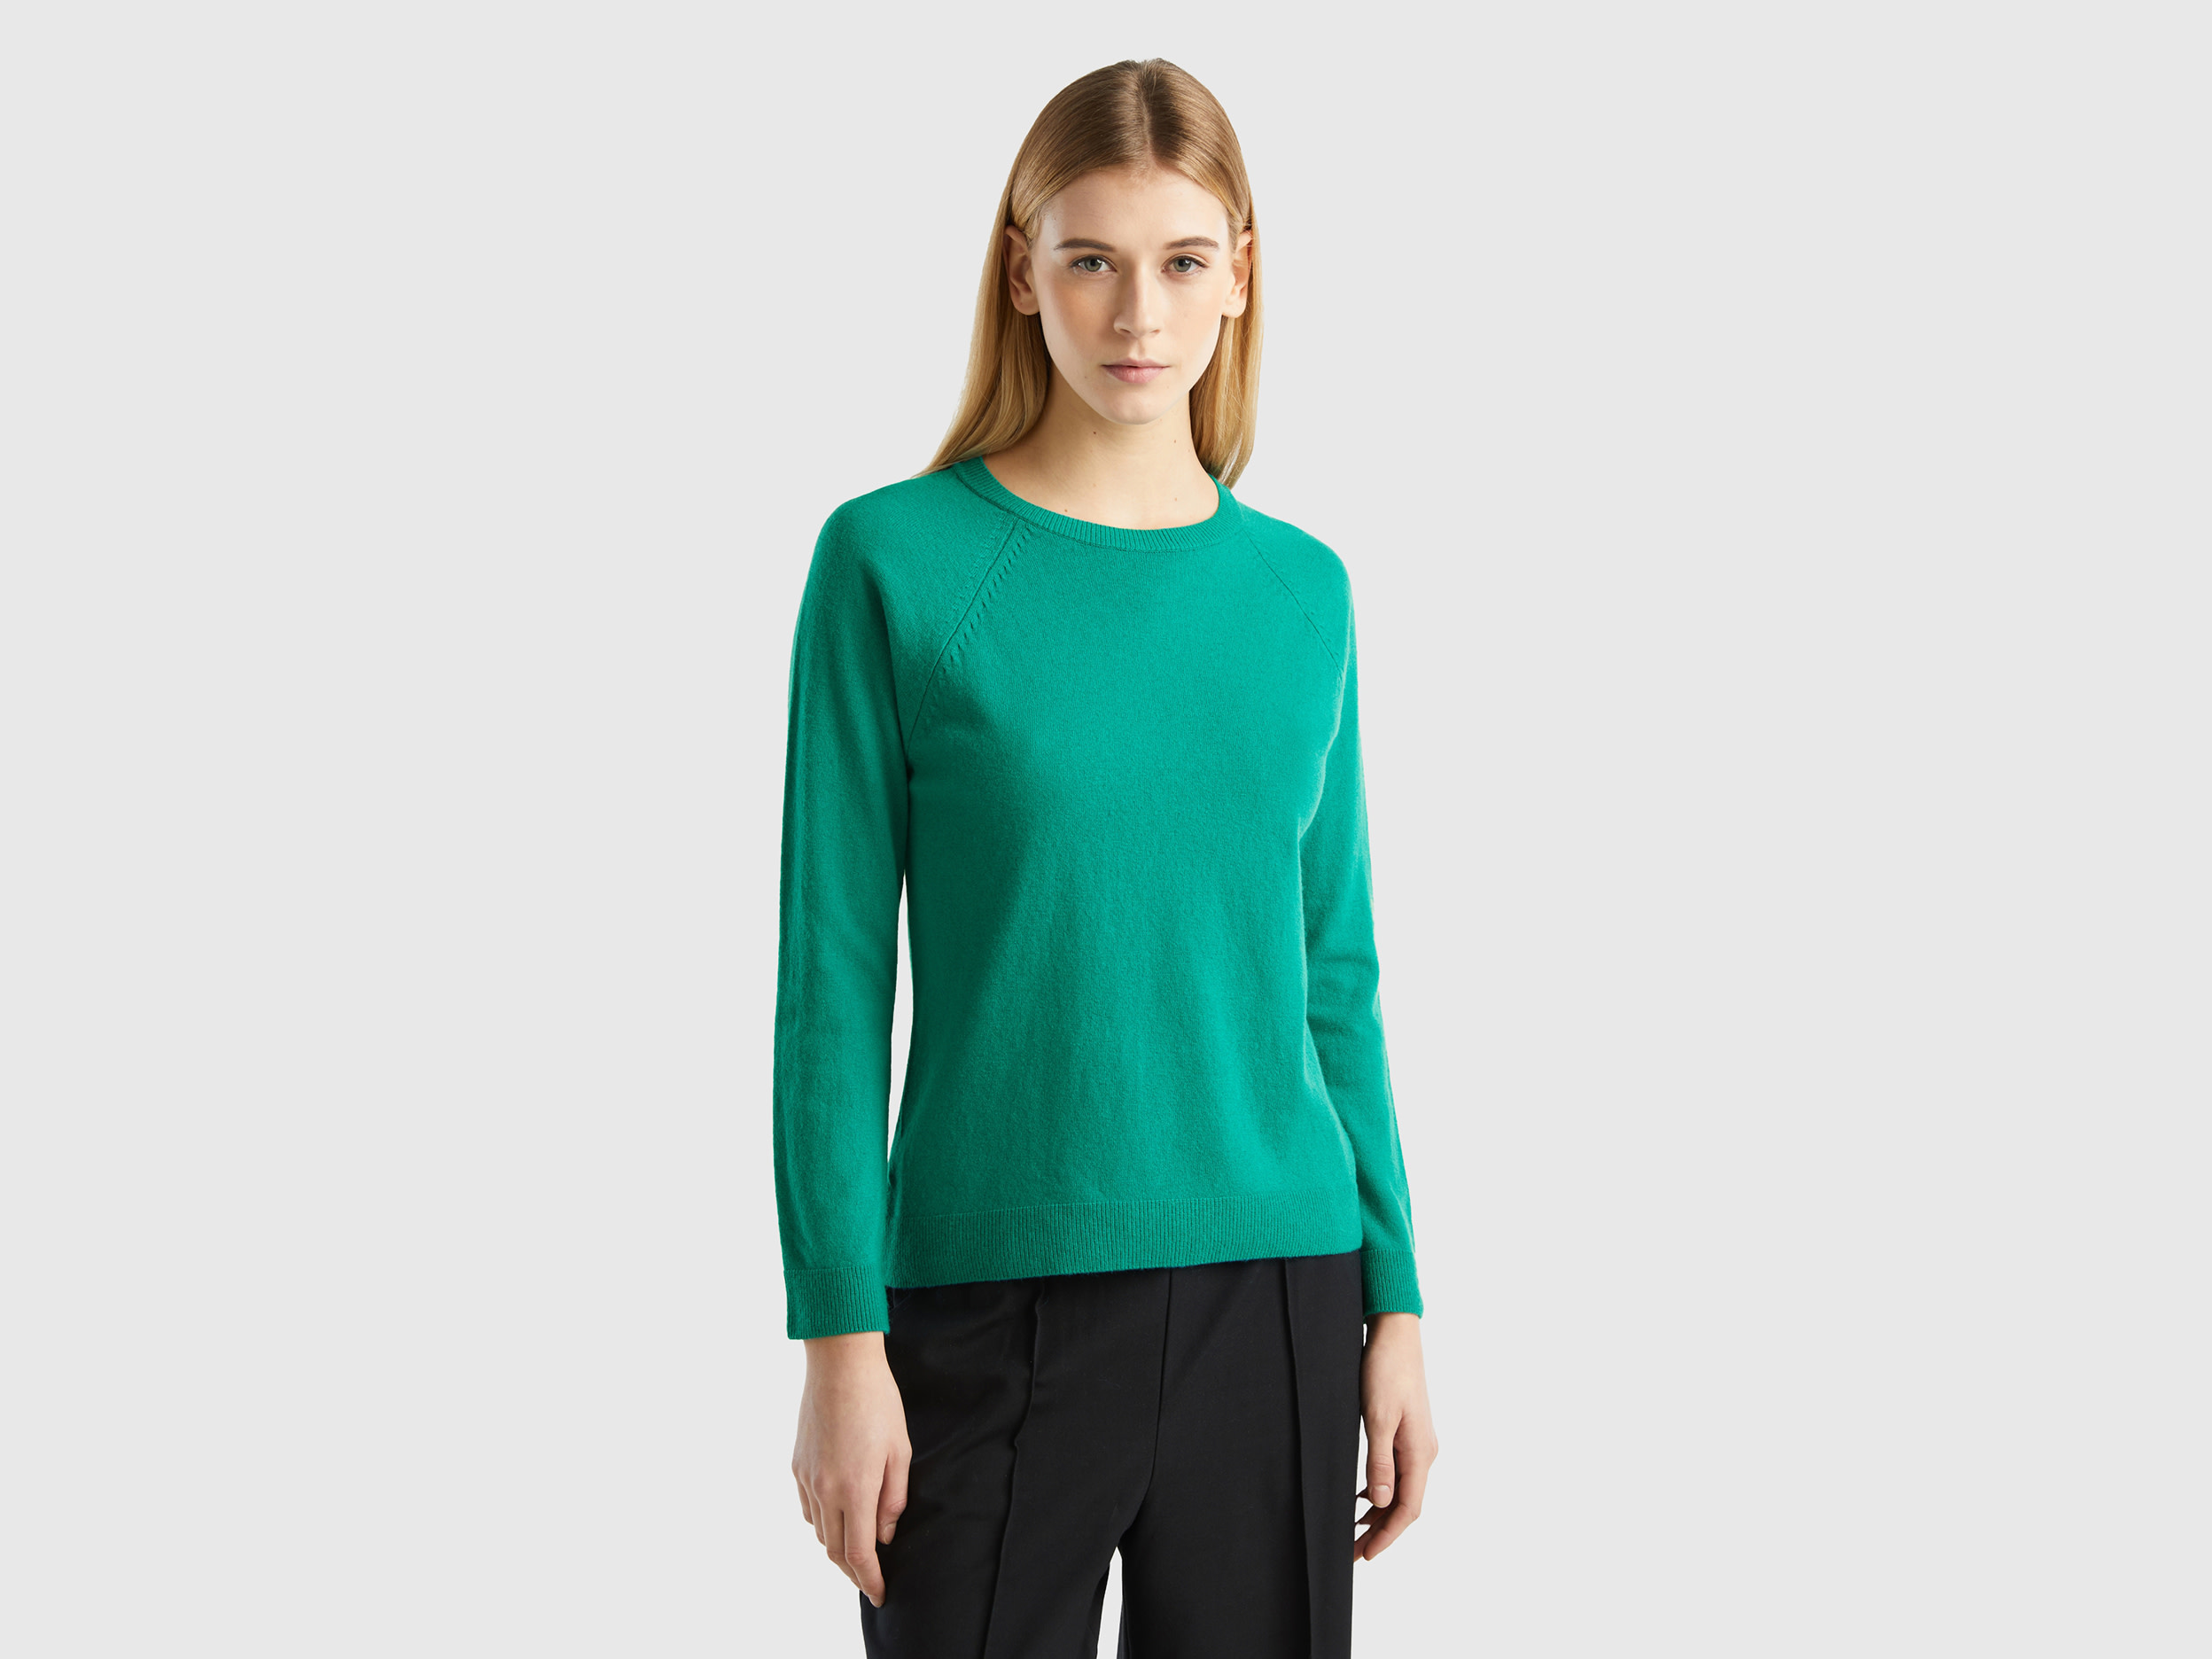 Benetton, Aqua Green Crew Neck Sweater In Wool And Cashmere Blend, size M, Aqua, Women